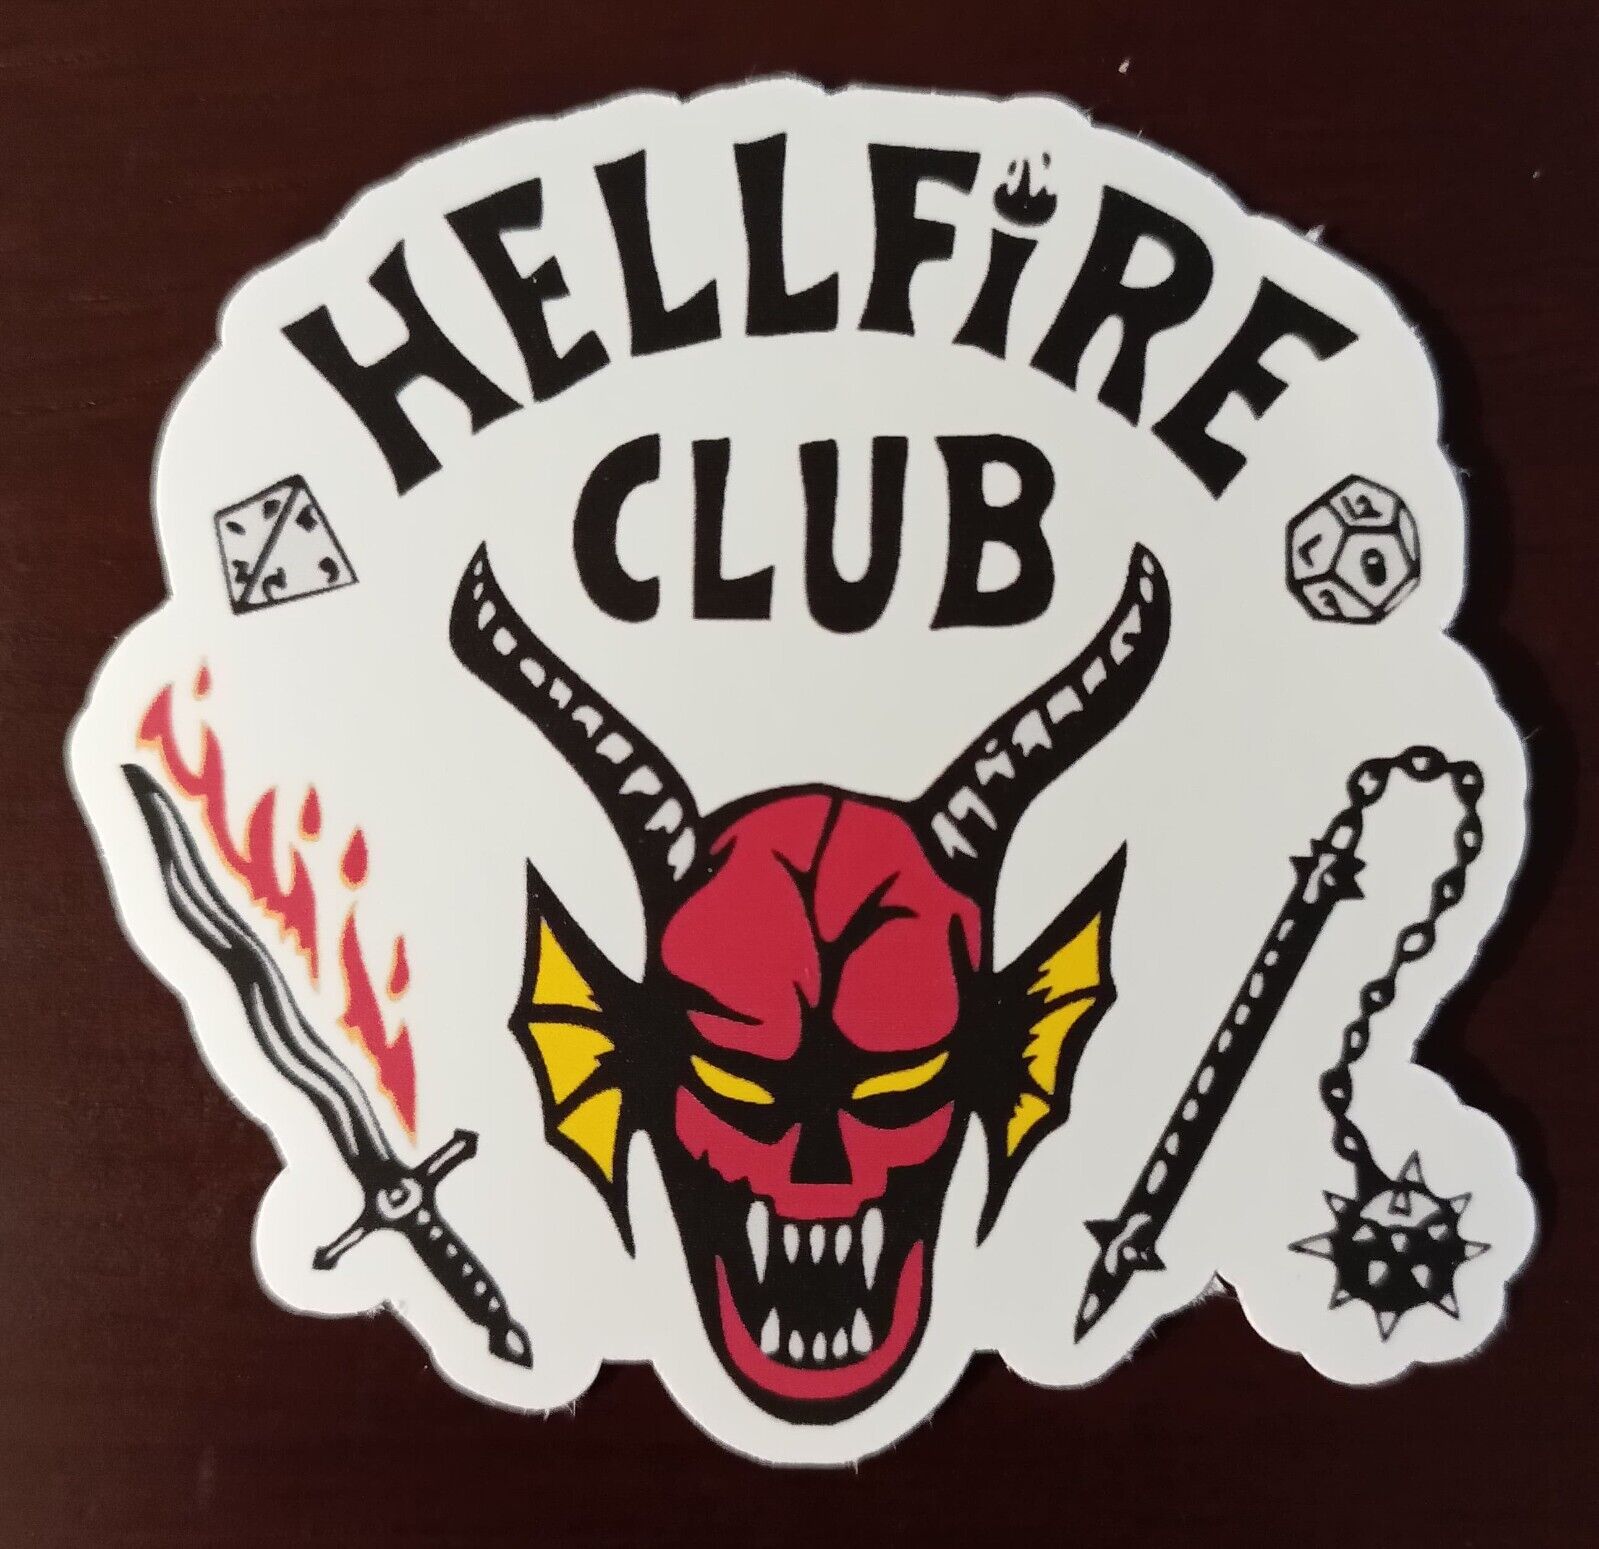 Handmade (HELLFIRE CLUB) sticker 2.5 by 2.4 SEE DESCRIPTION